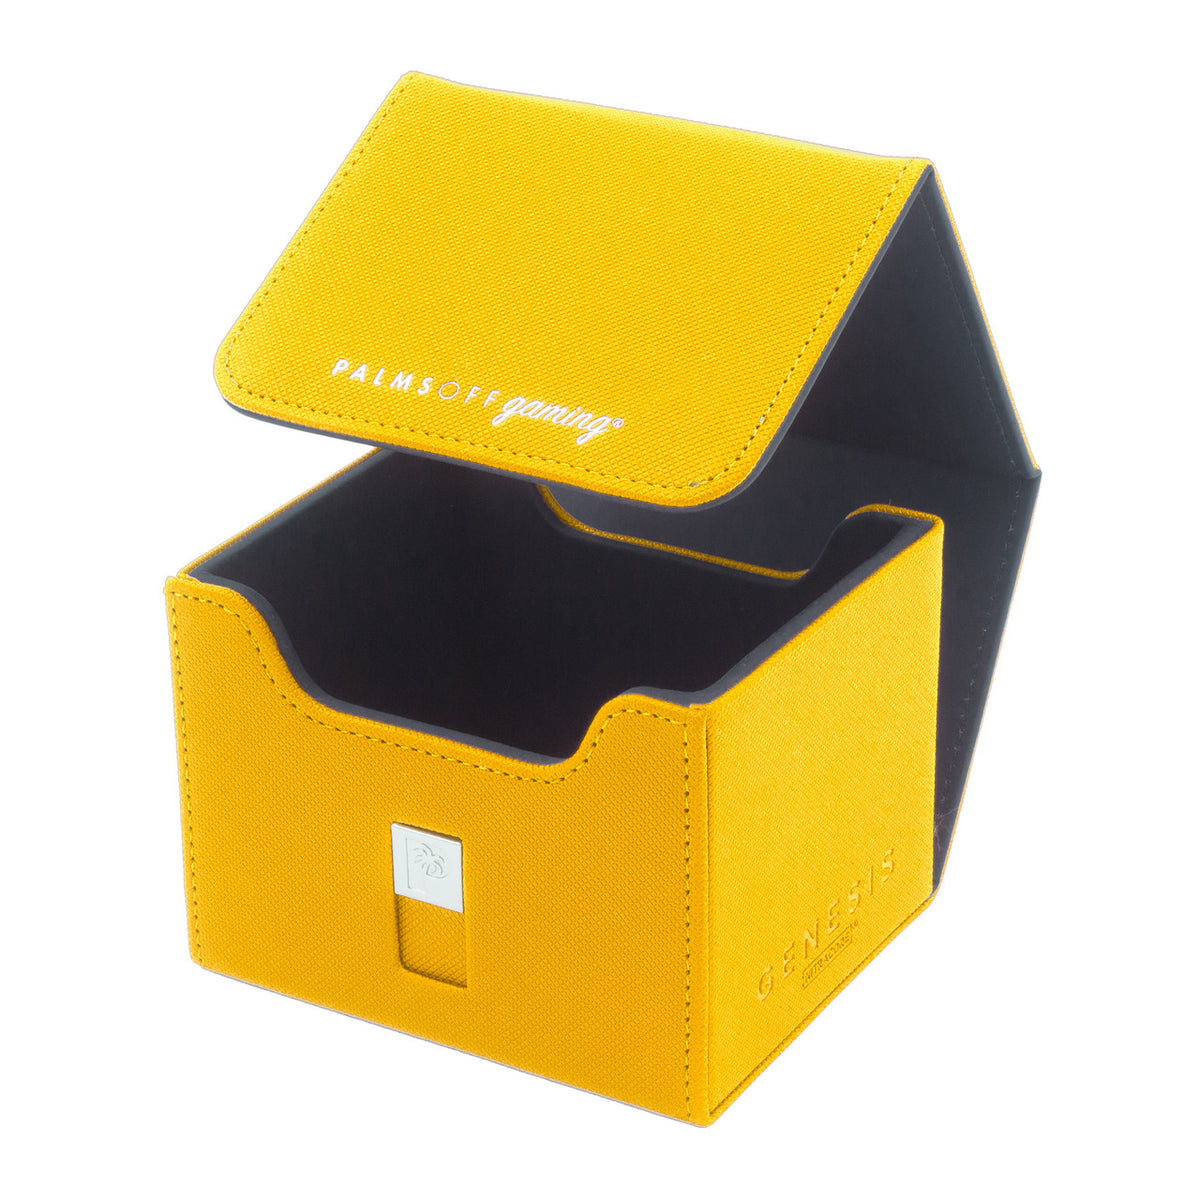 Palms Off Gaming - Genesis Deck Box Yellow